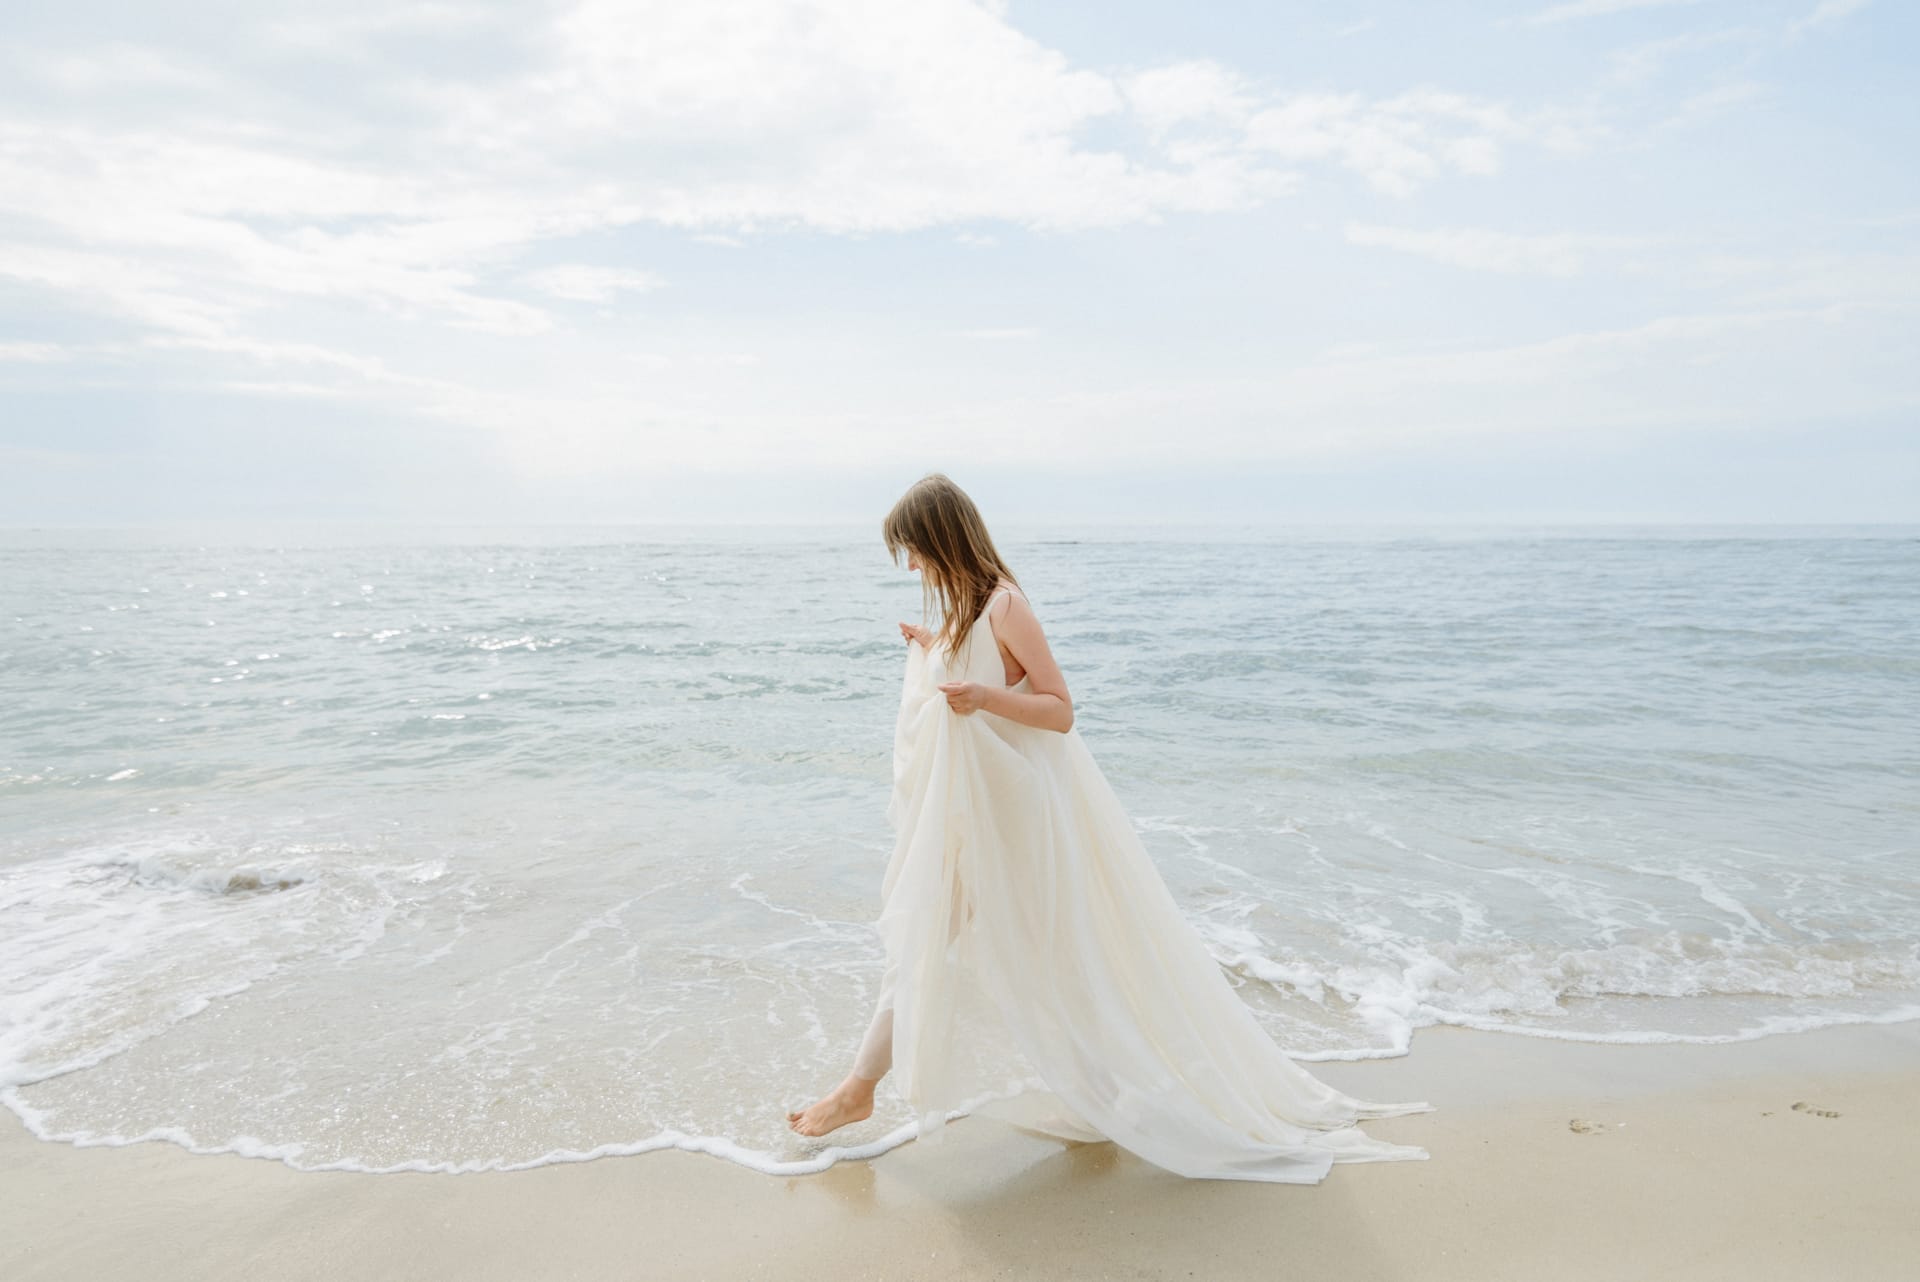 Woman long white dress walks along beach pier against sea